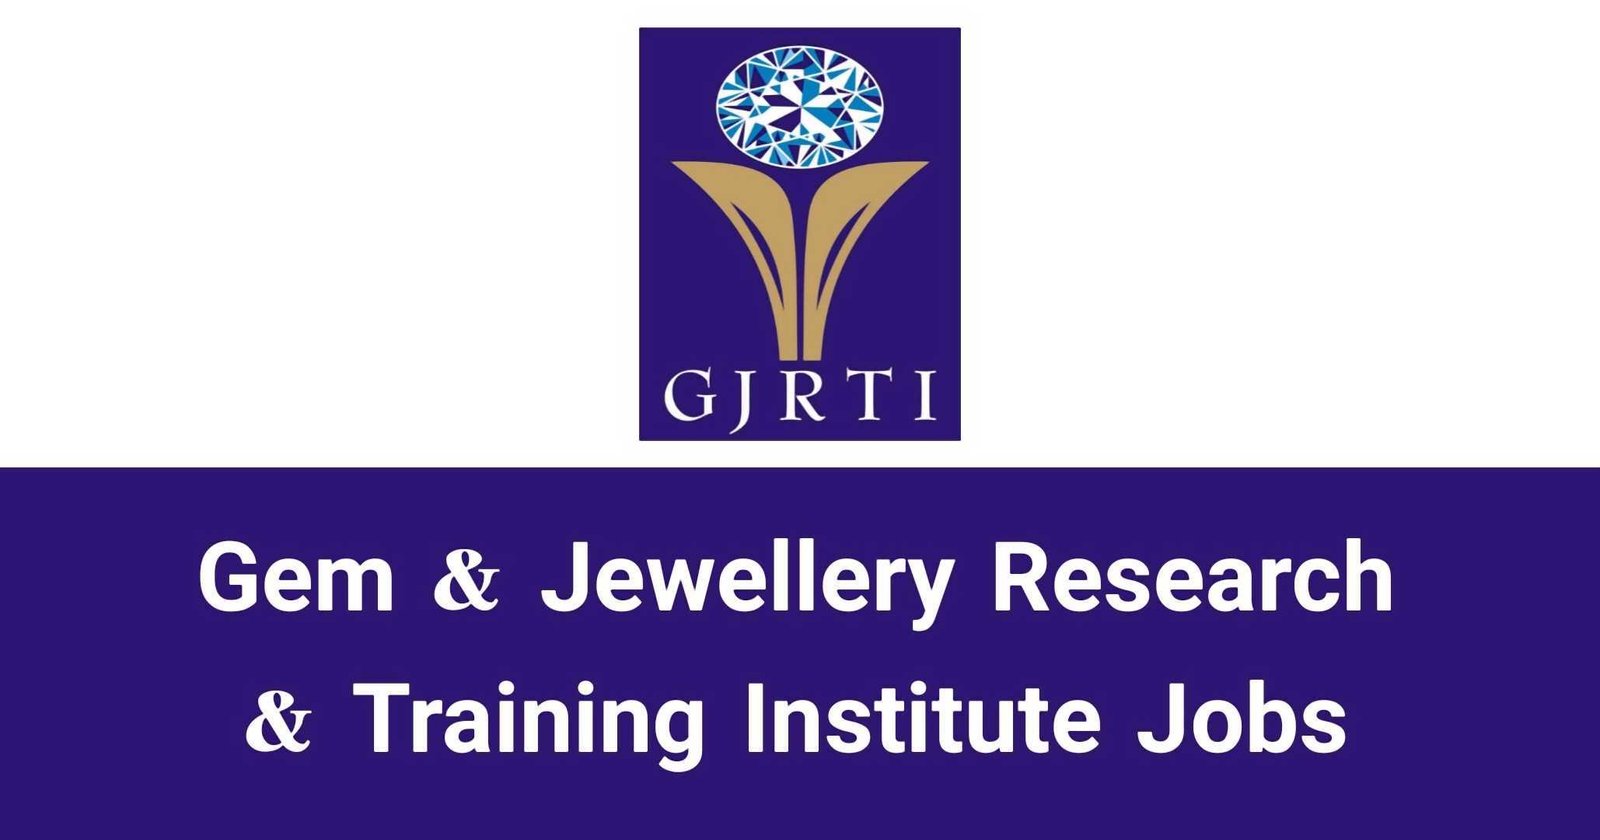 Gem & Jewellery Research & Training Institute Jobs Vacancies Recruitments